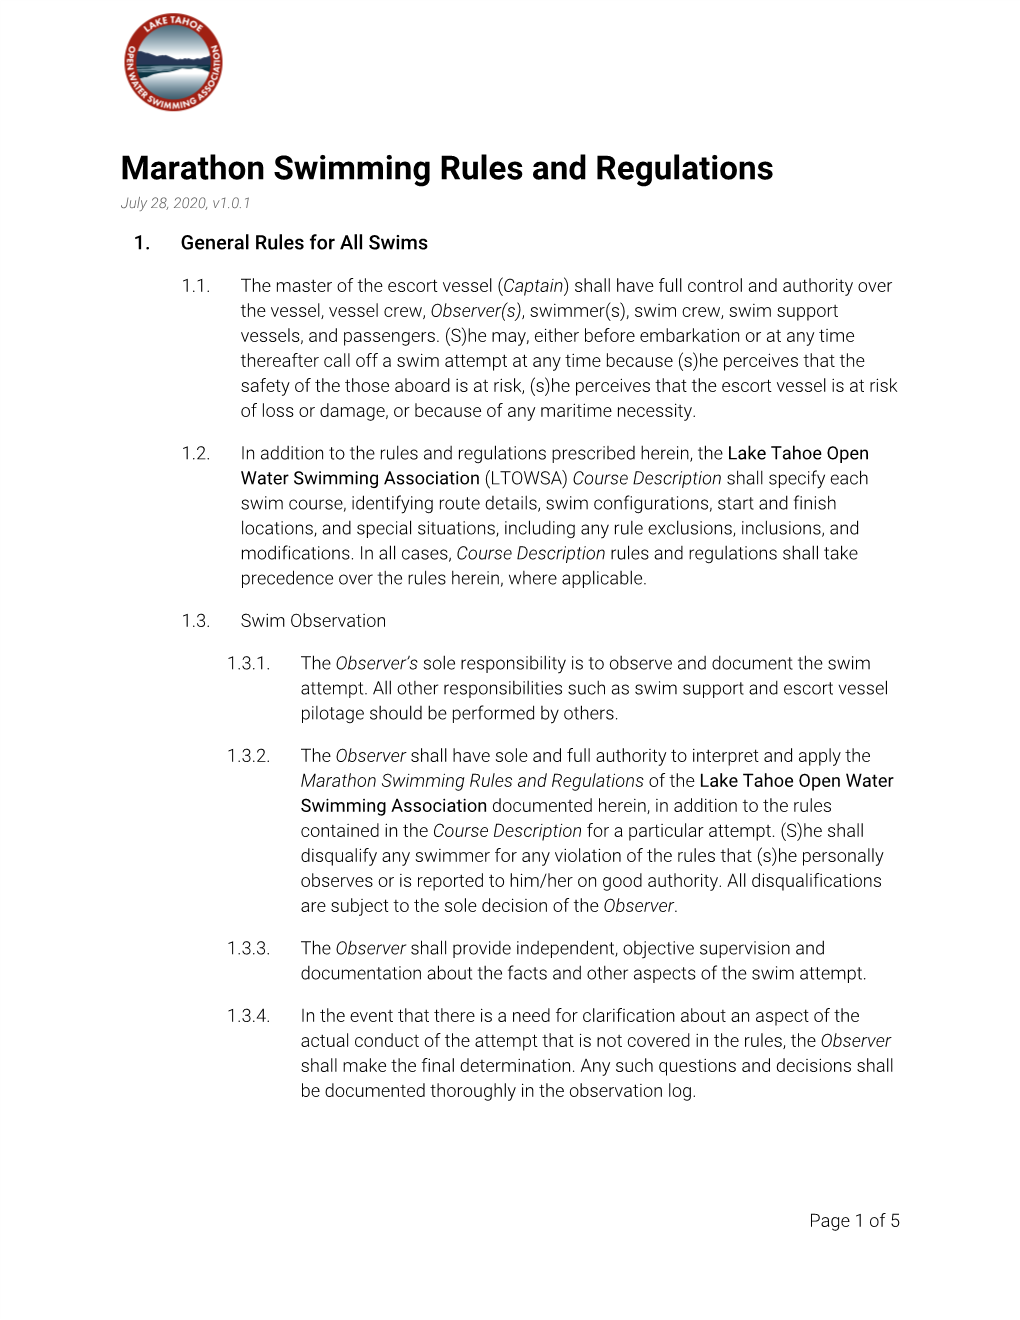 Marathon Swimming Rules and Regulations July 28, 2020, V1.0.1 1